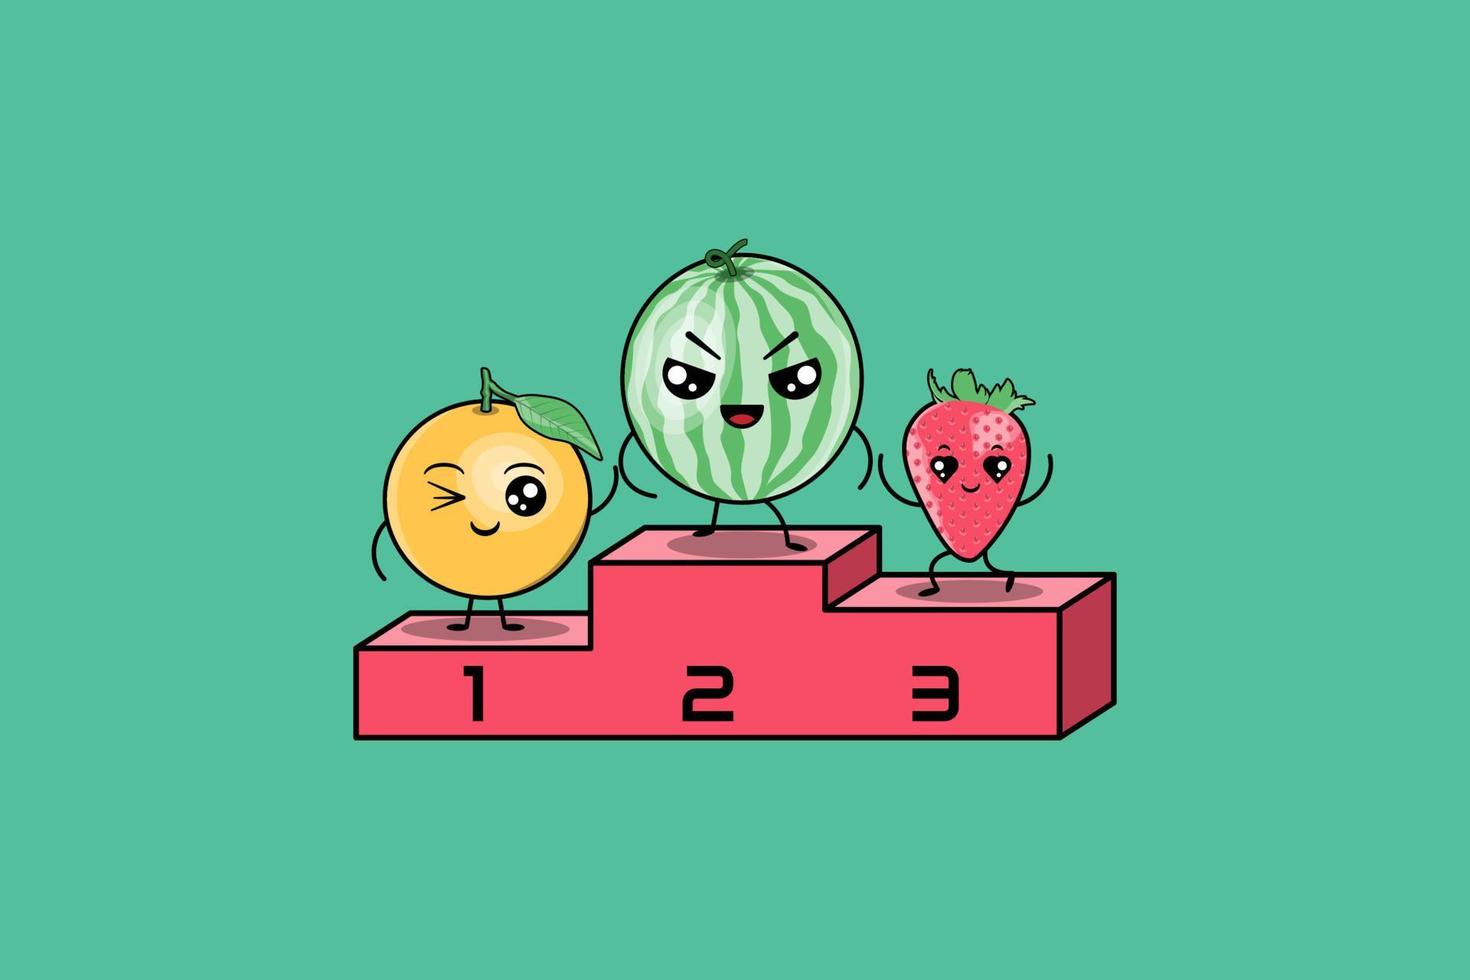 cute colorfull kawaii fruits cartoon characters vector set with many expression